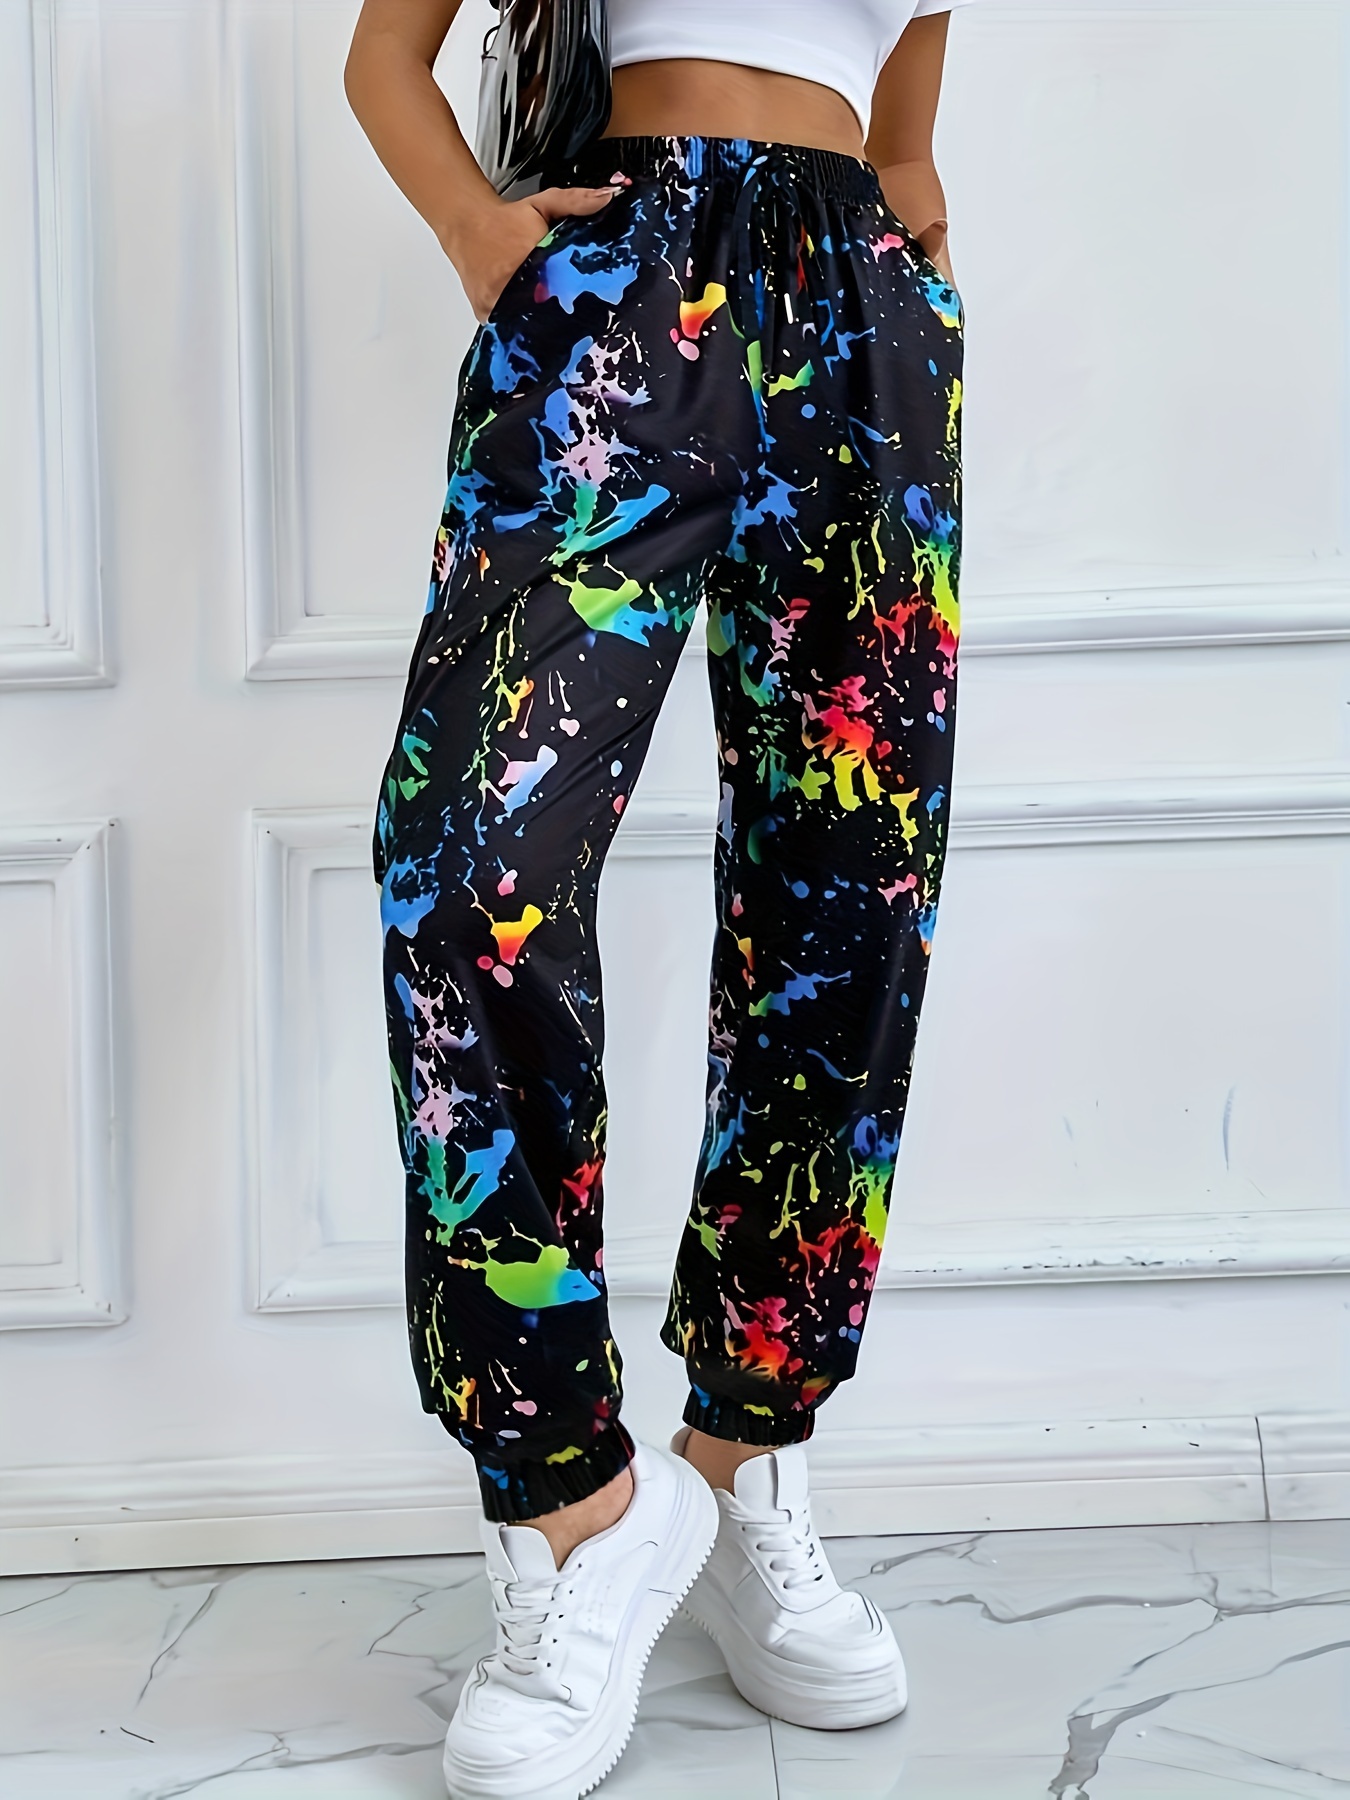 10pcs Casual Sport Pants Women Trousers Fashion Graffiti Printed Slacks  Streetwear Sweatpants Bulk Lots Wholesale Items M10343